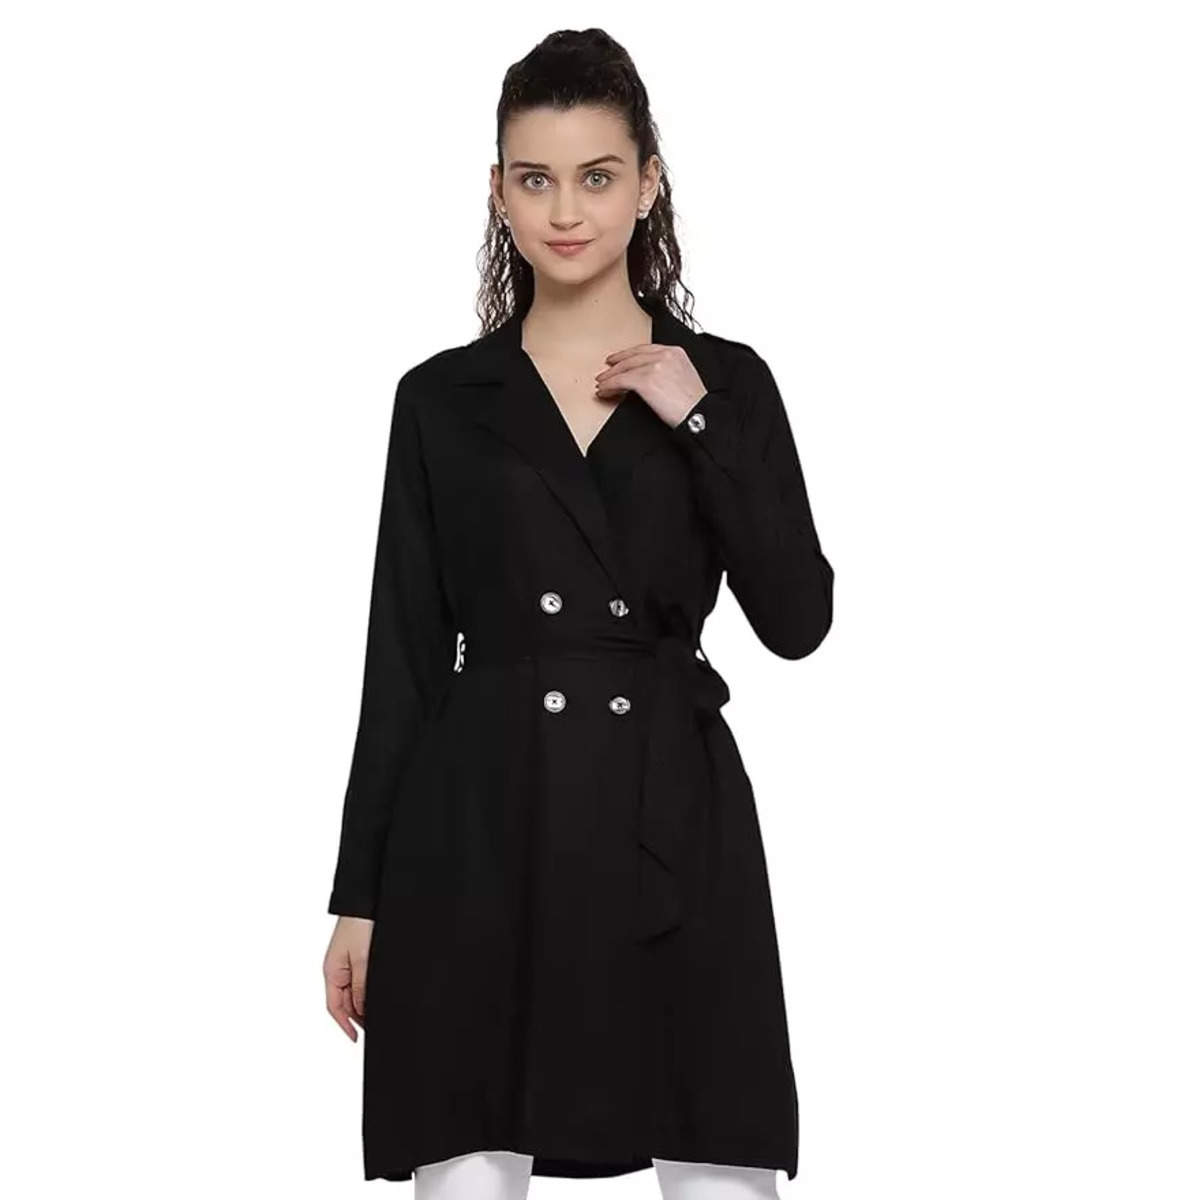 black winter coat for women under 1000: Black winter coat for women under  999 for warmth under budget - The Economic Times